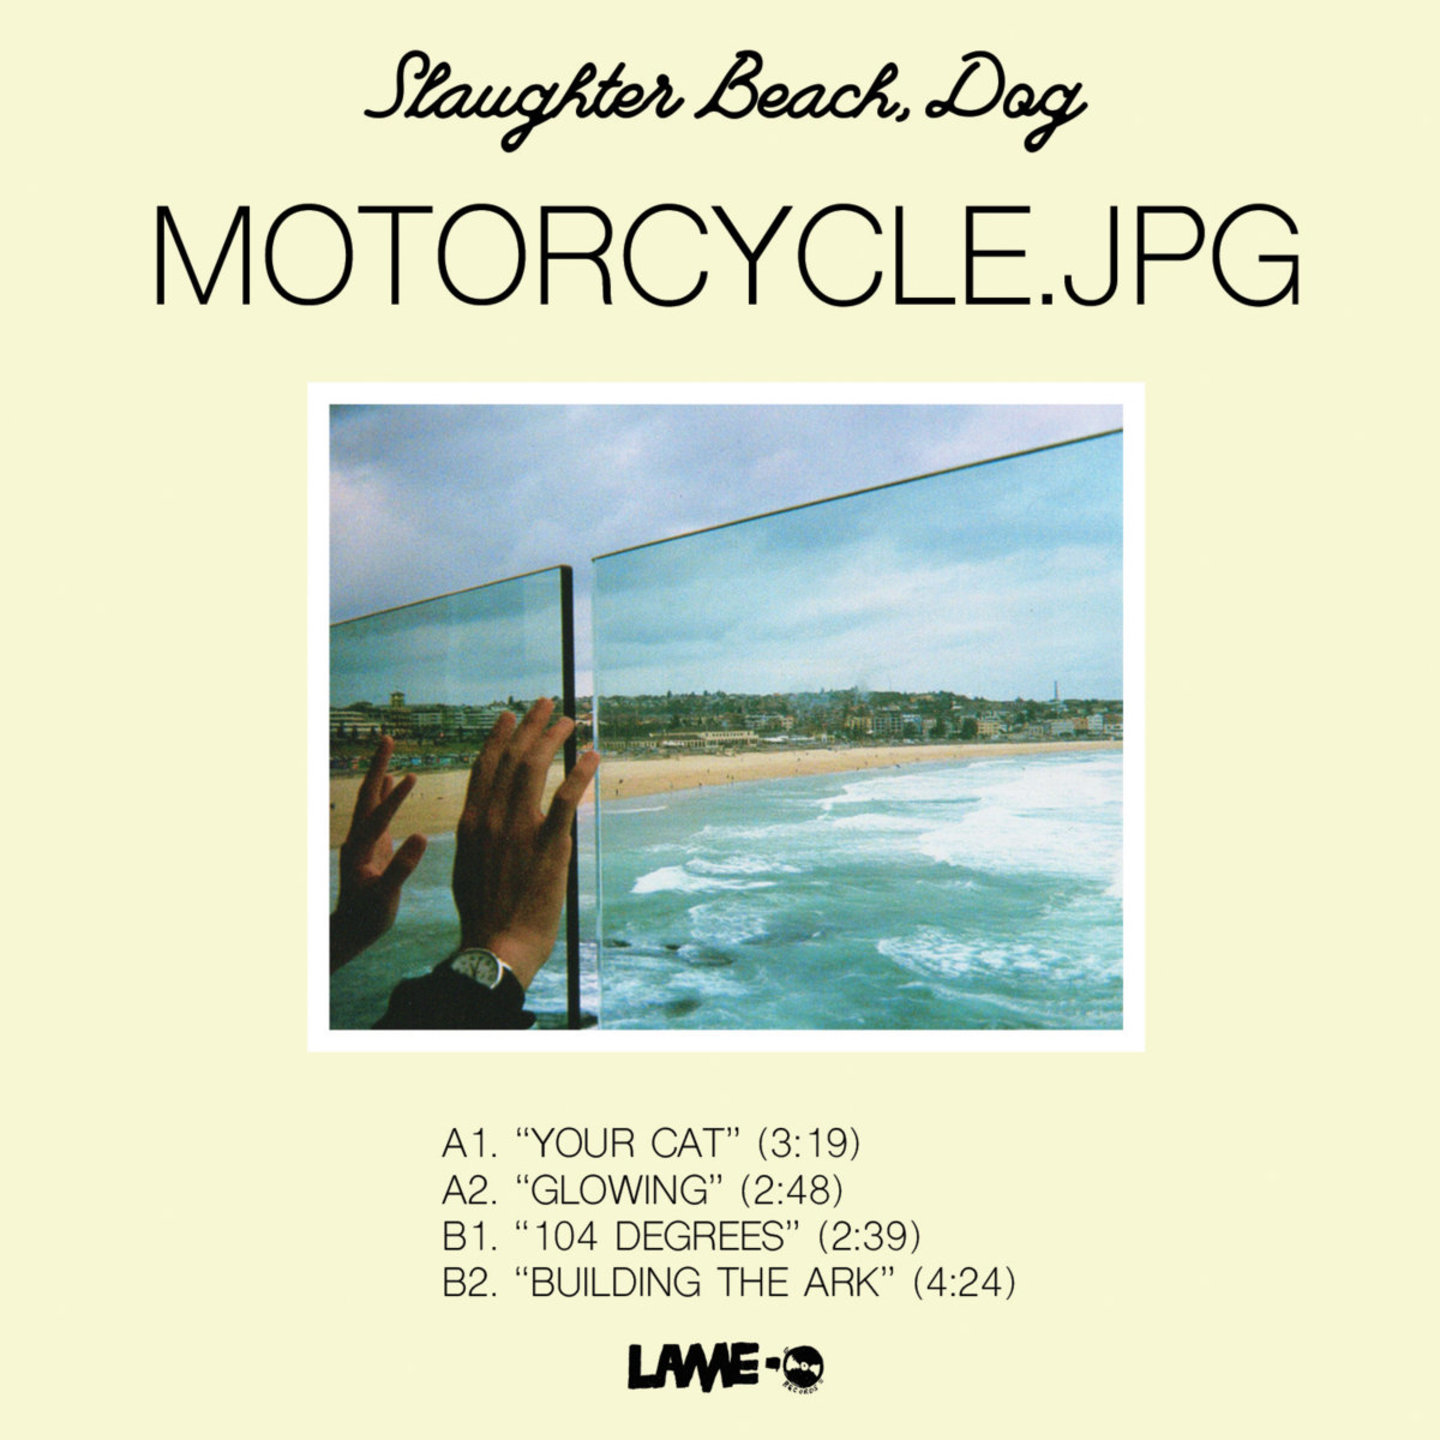 SLAUGHTER BEACH, DOG - Motorcycle.jpg 12EP